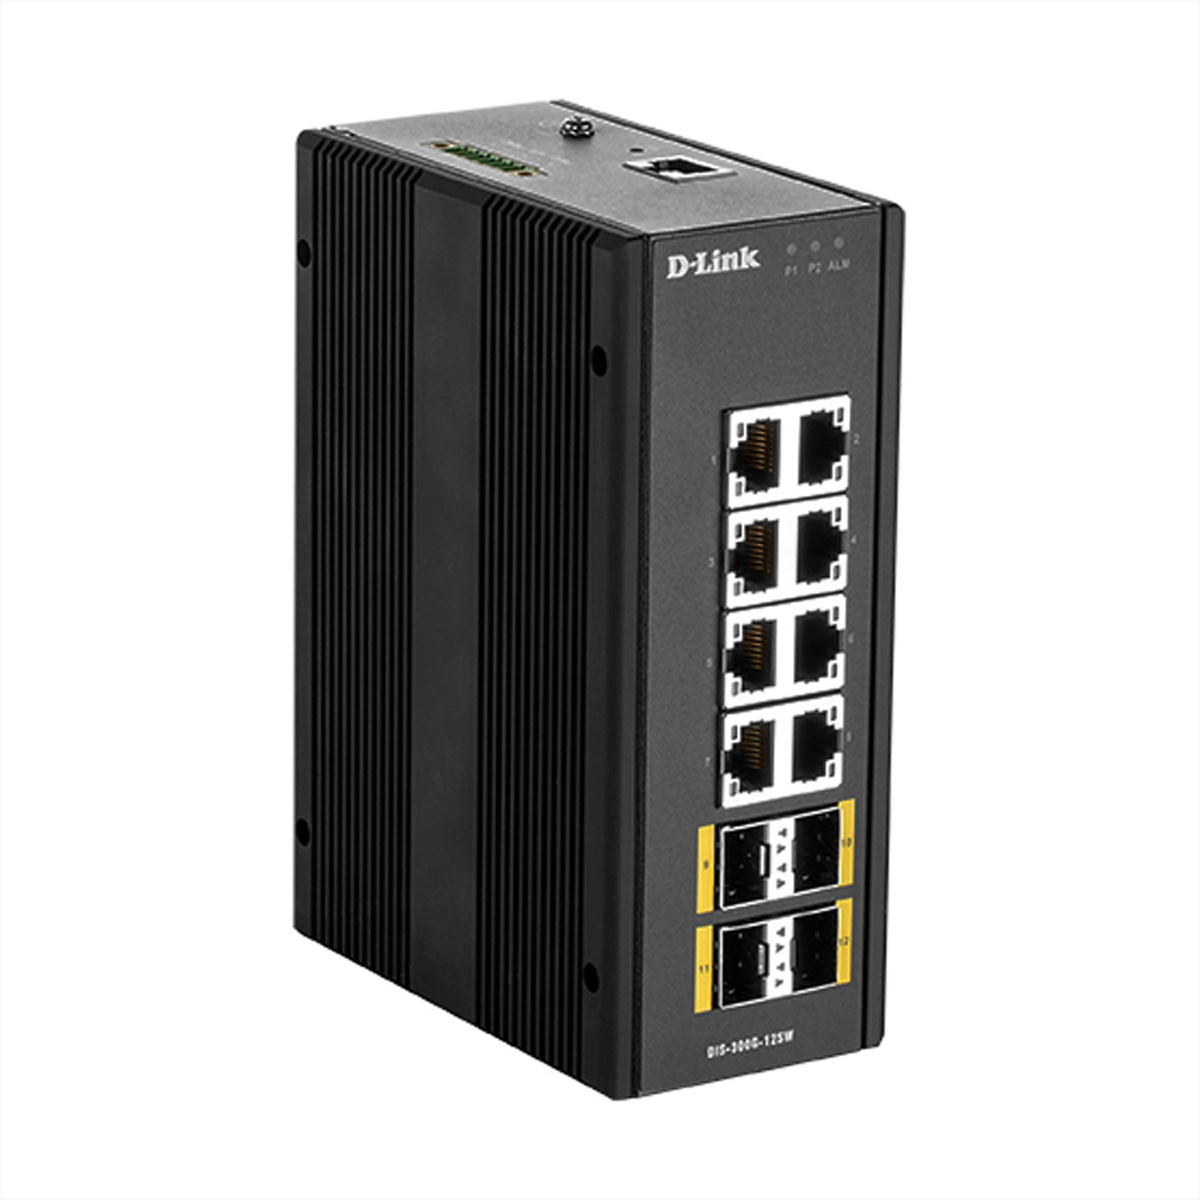 D-LINK DIS-300G-12SW 12-Port SwitchLayer2 Managed Gigabit Industrial Gigabit Ethernet Switch